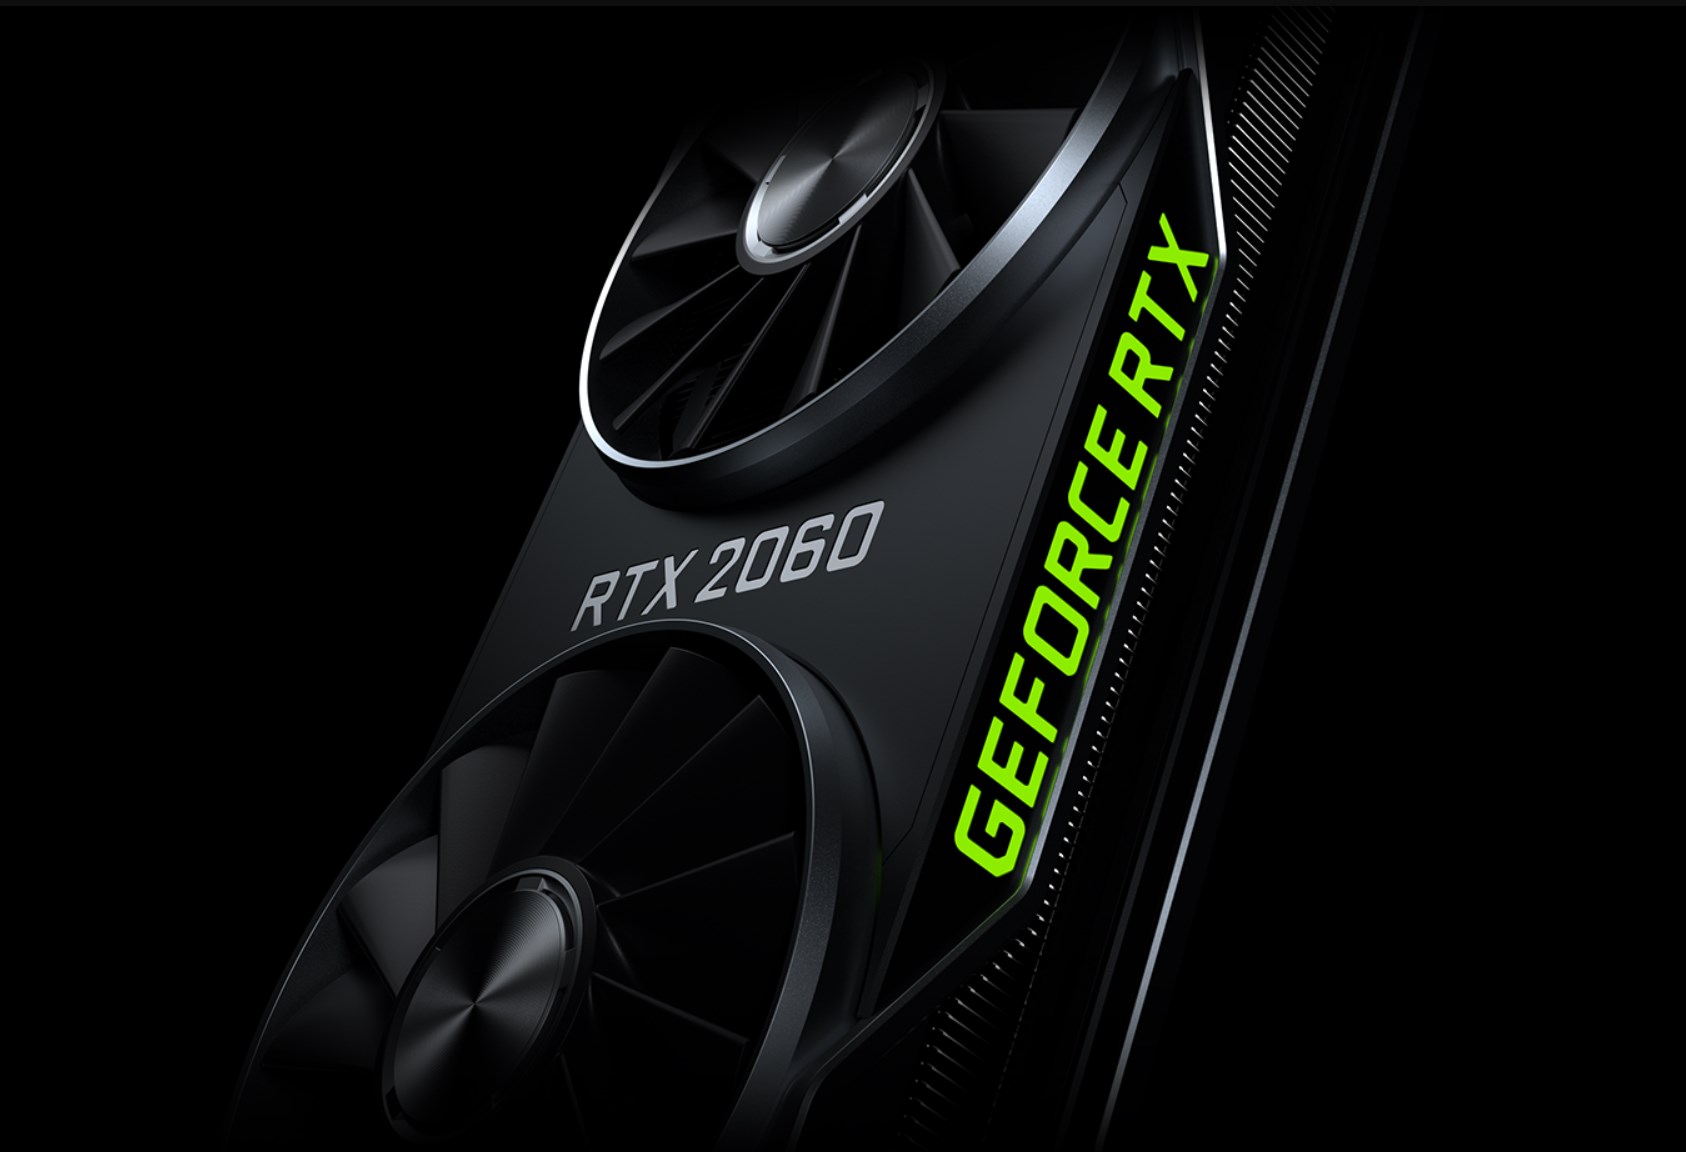 GeForce RTX 2060 ekran kartı